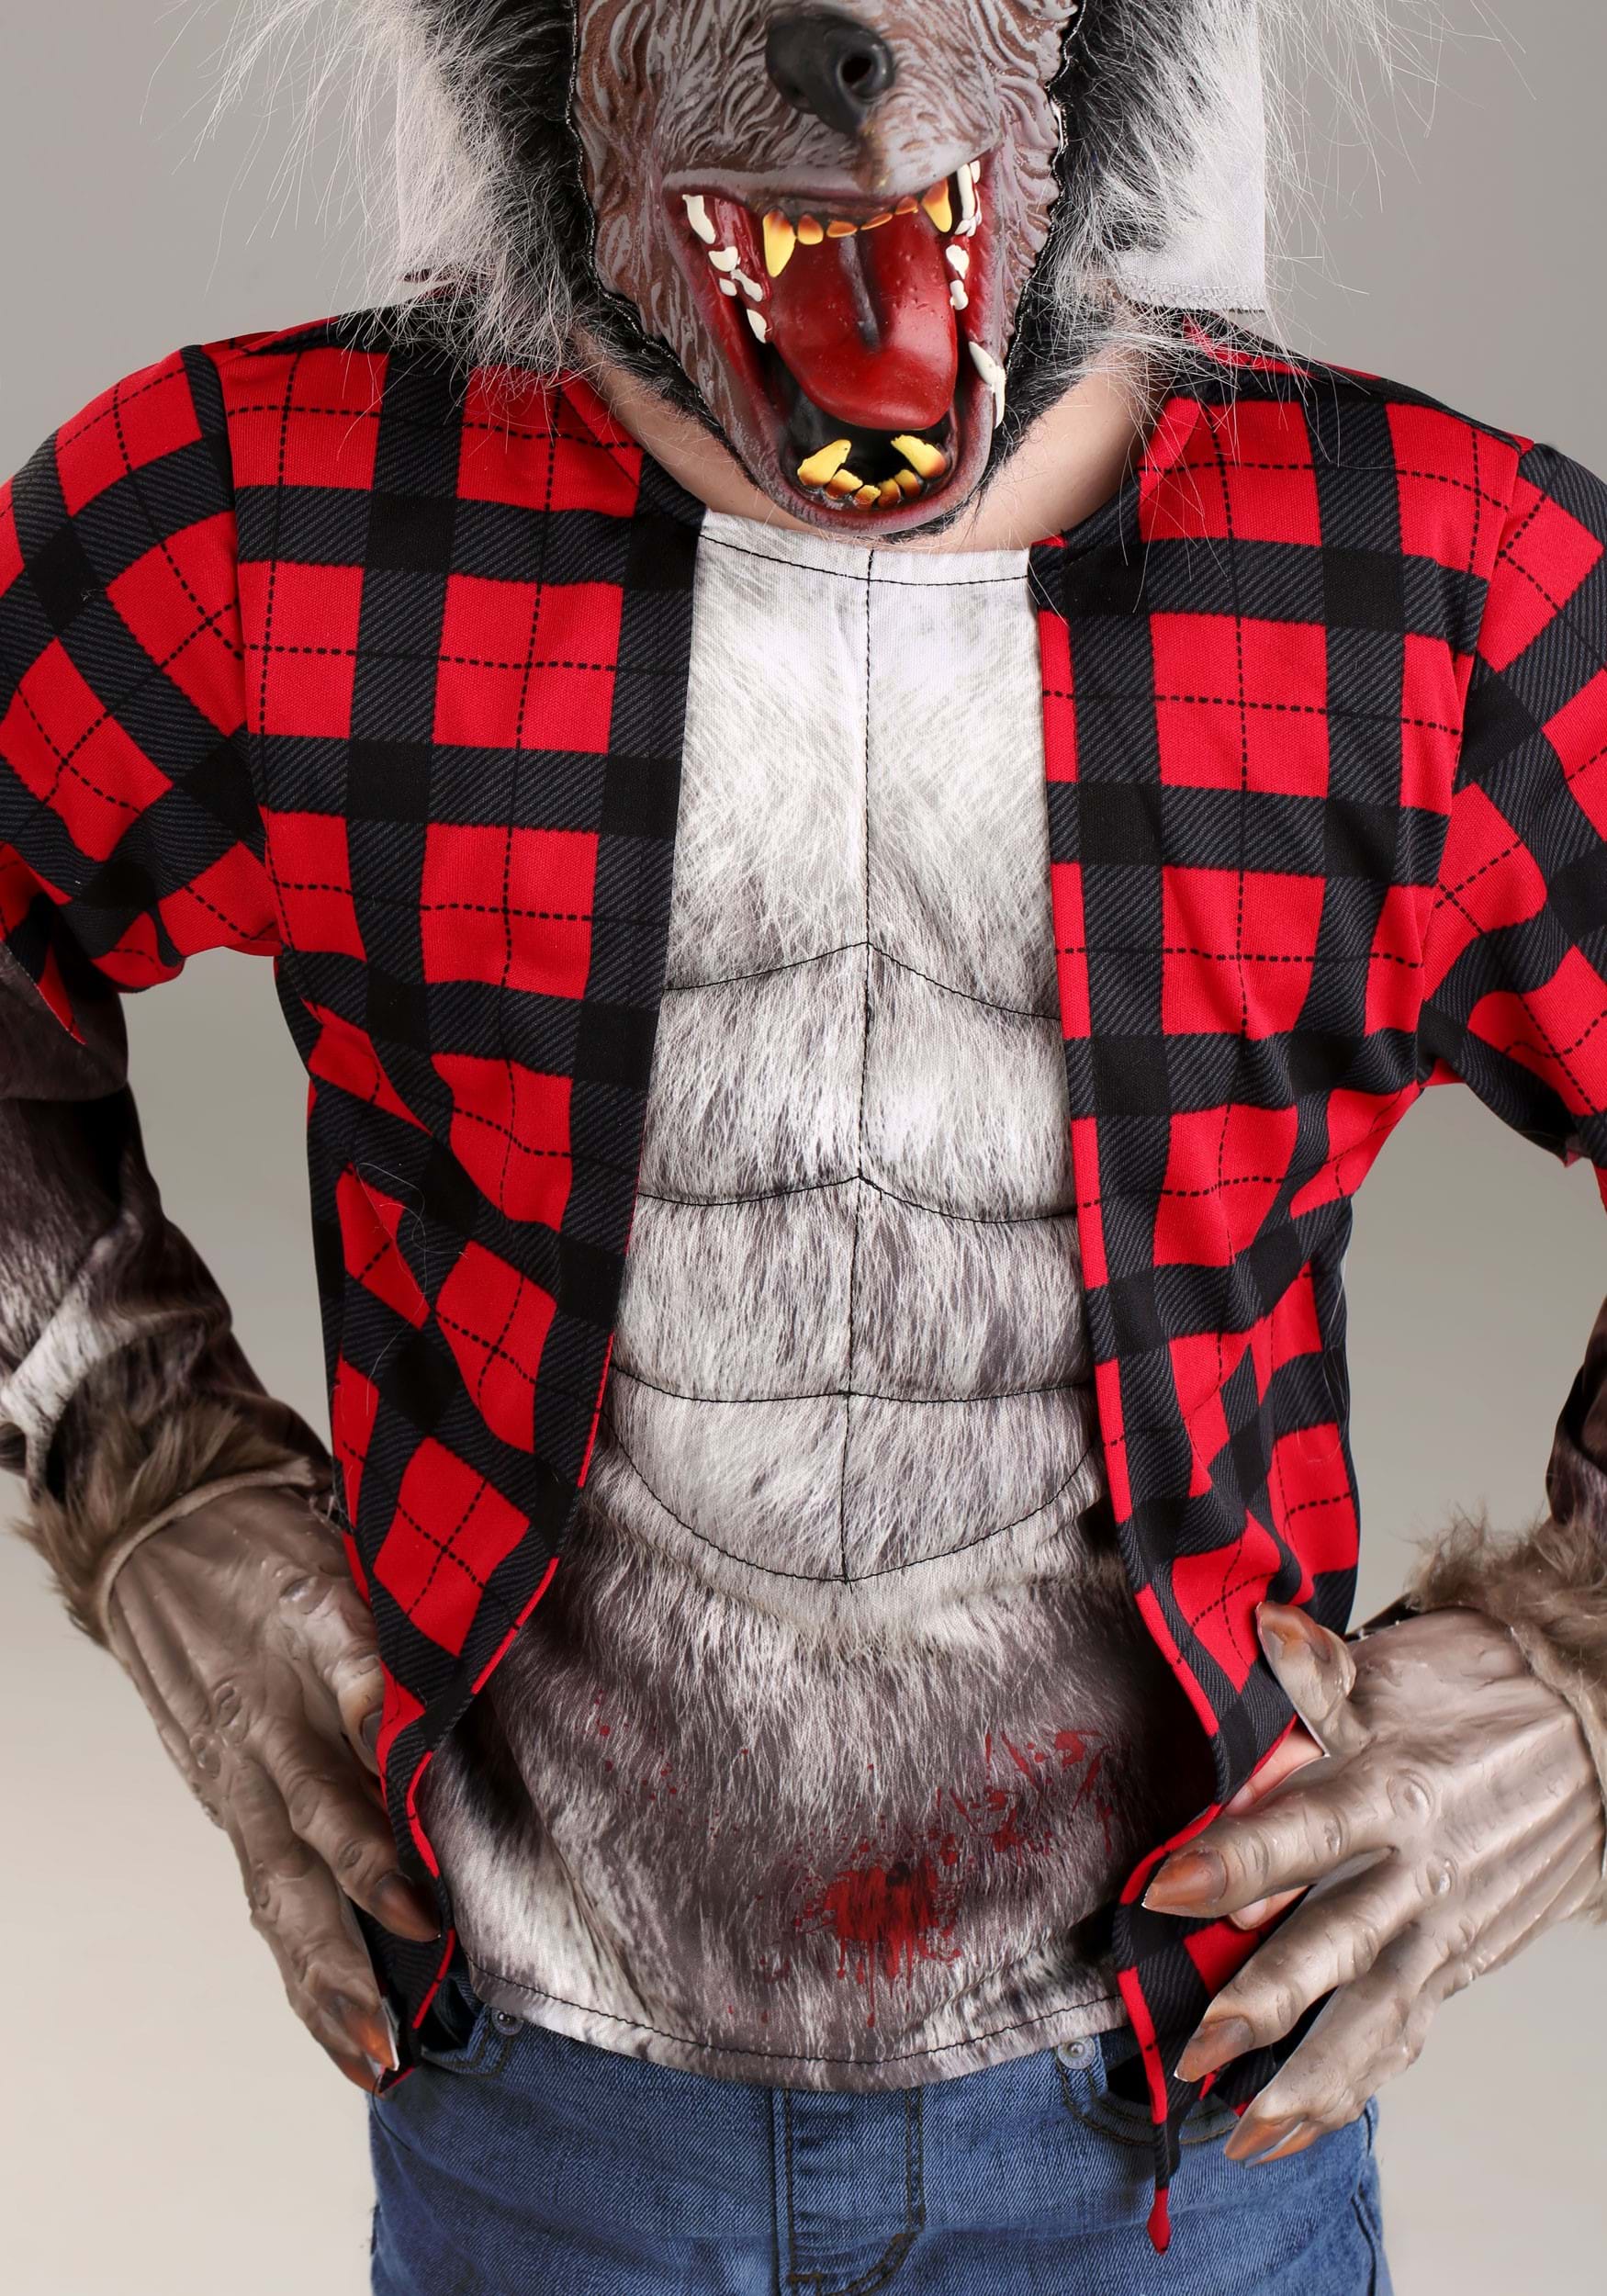 Wily Werewolf Costume For Kids